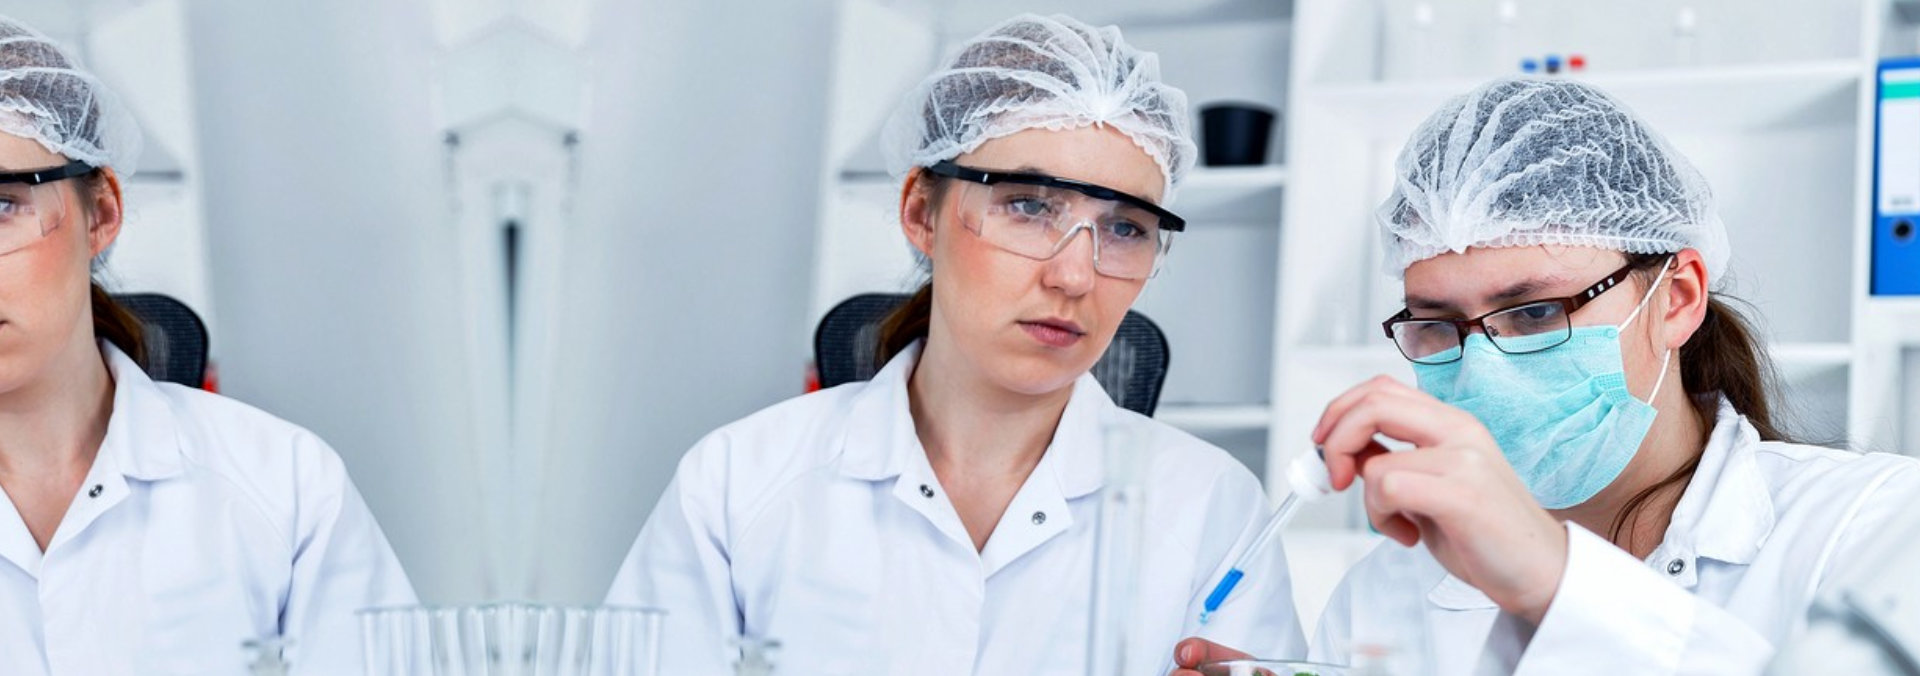 female scientists working